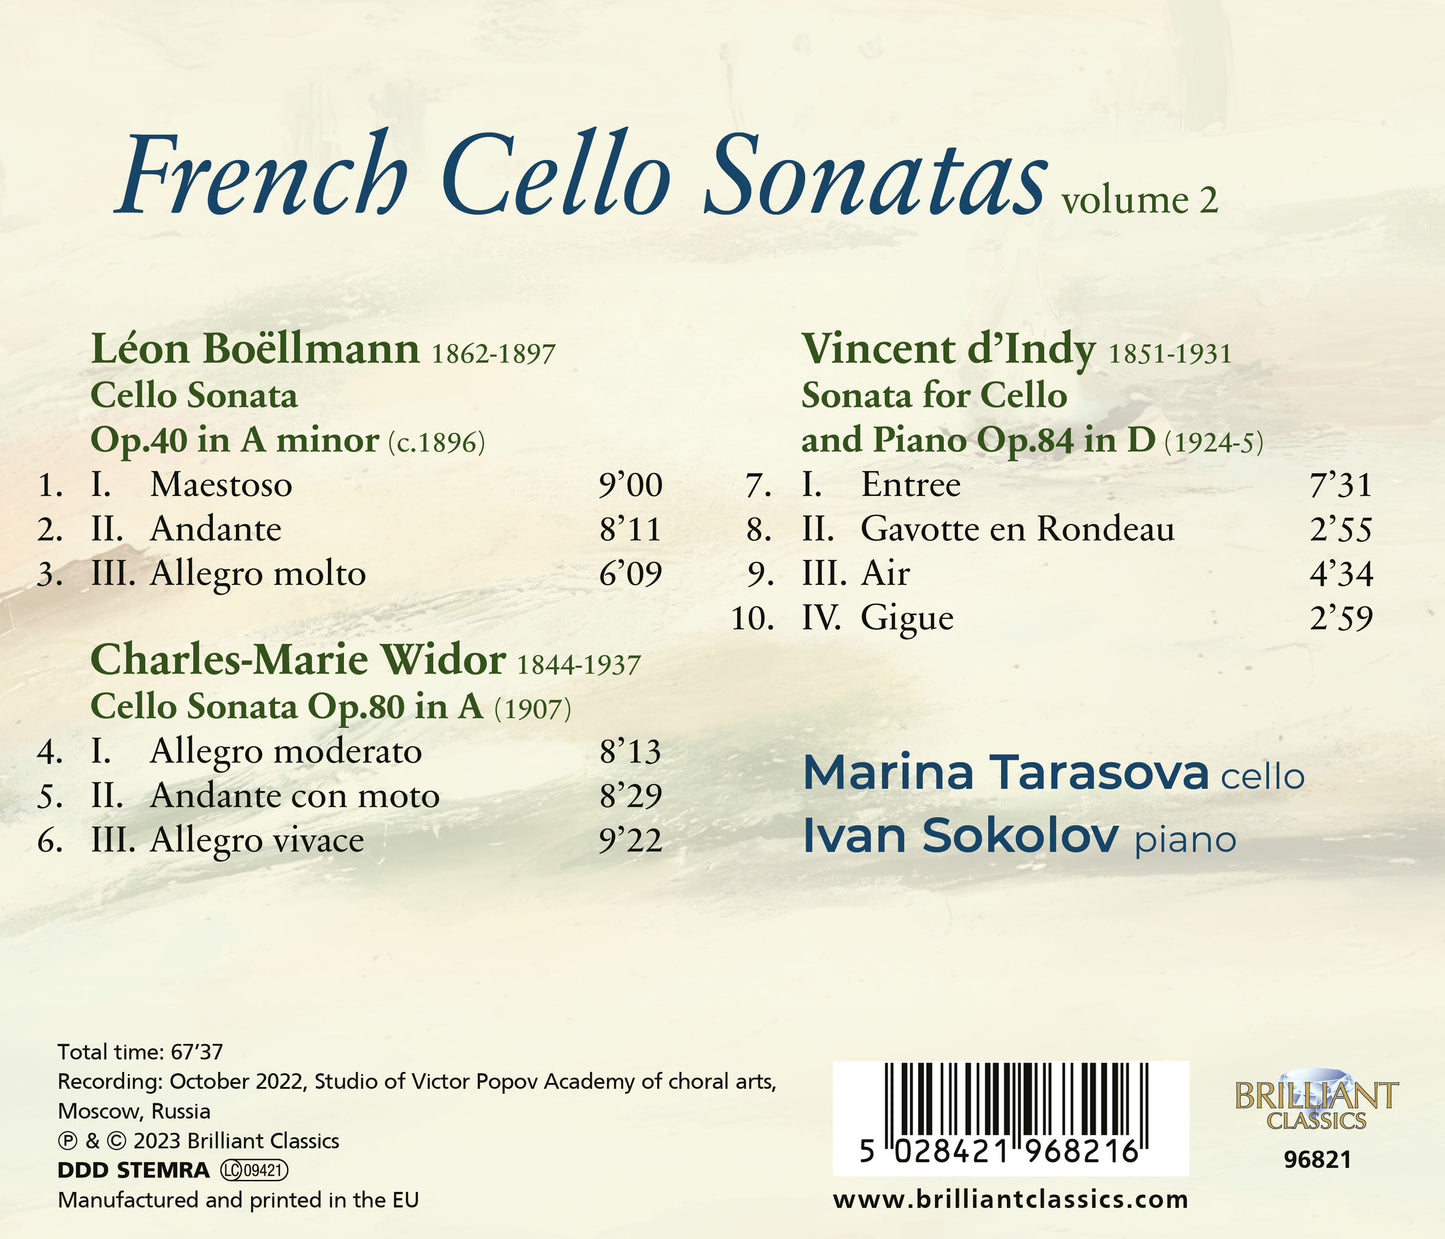 Boellmann, Widor & D'Indy: French Cello Sonatas, Vol. 2